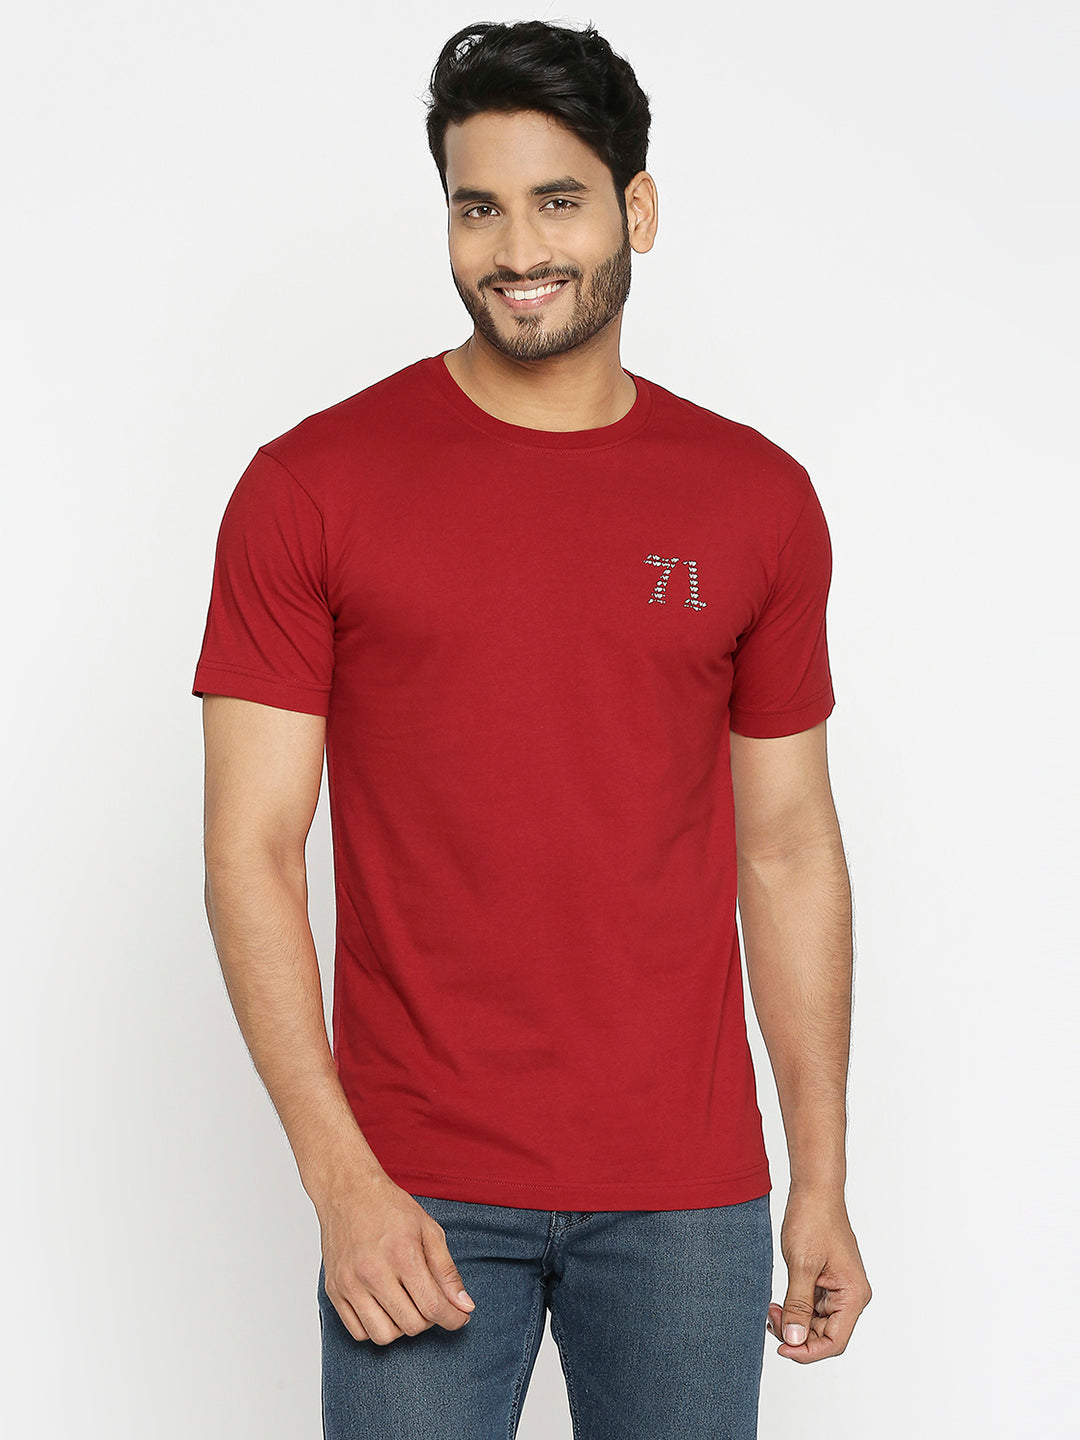 VIP Mens Maroon Colour Round Neck T-Shirt